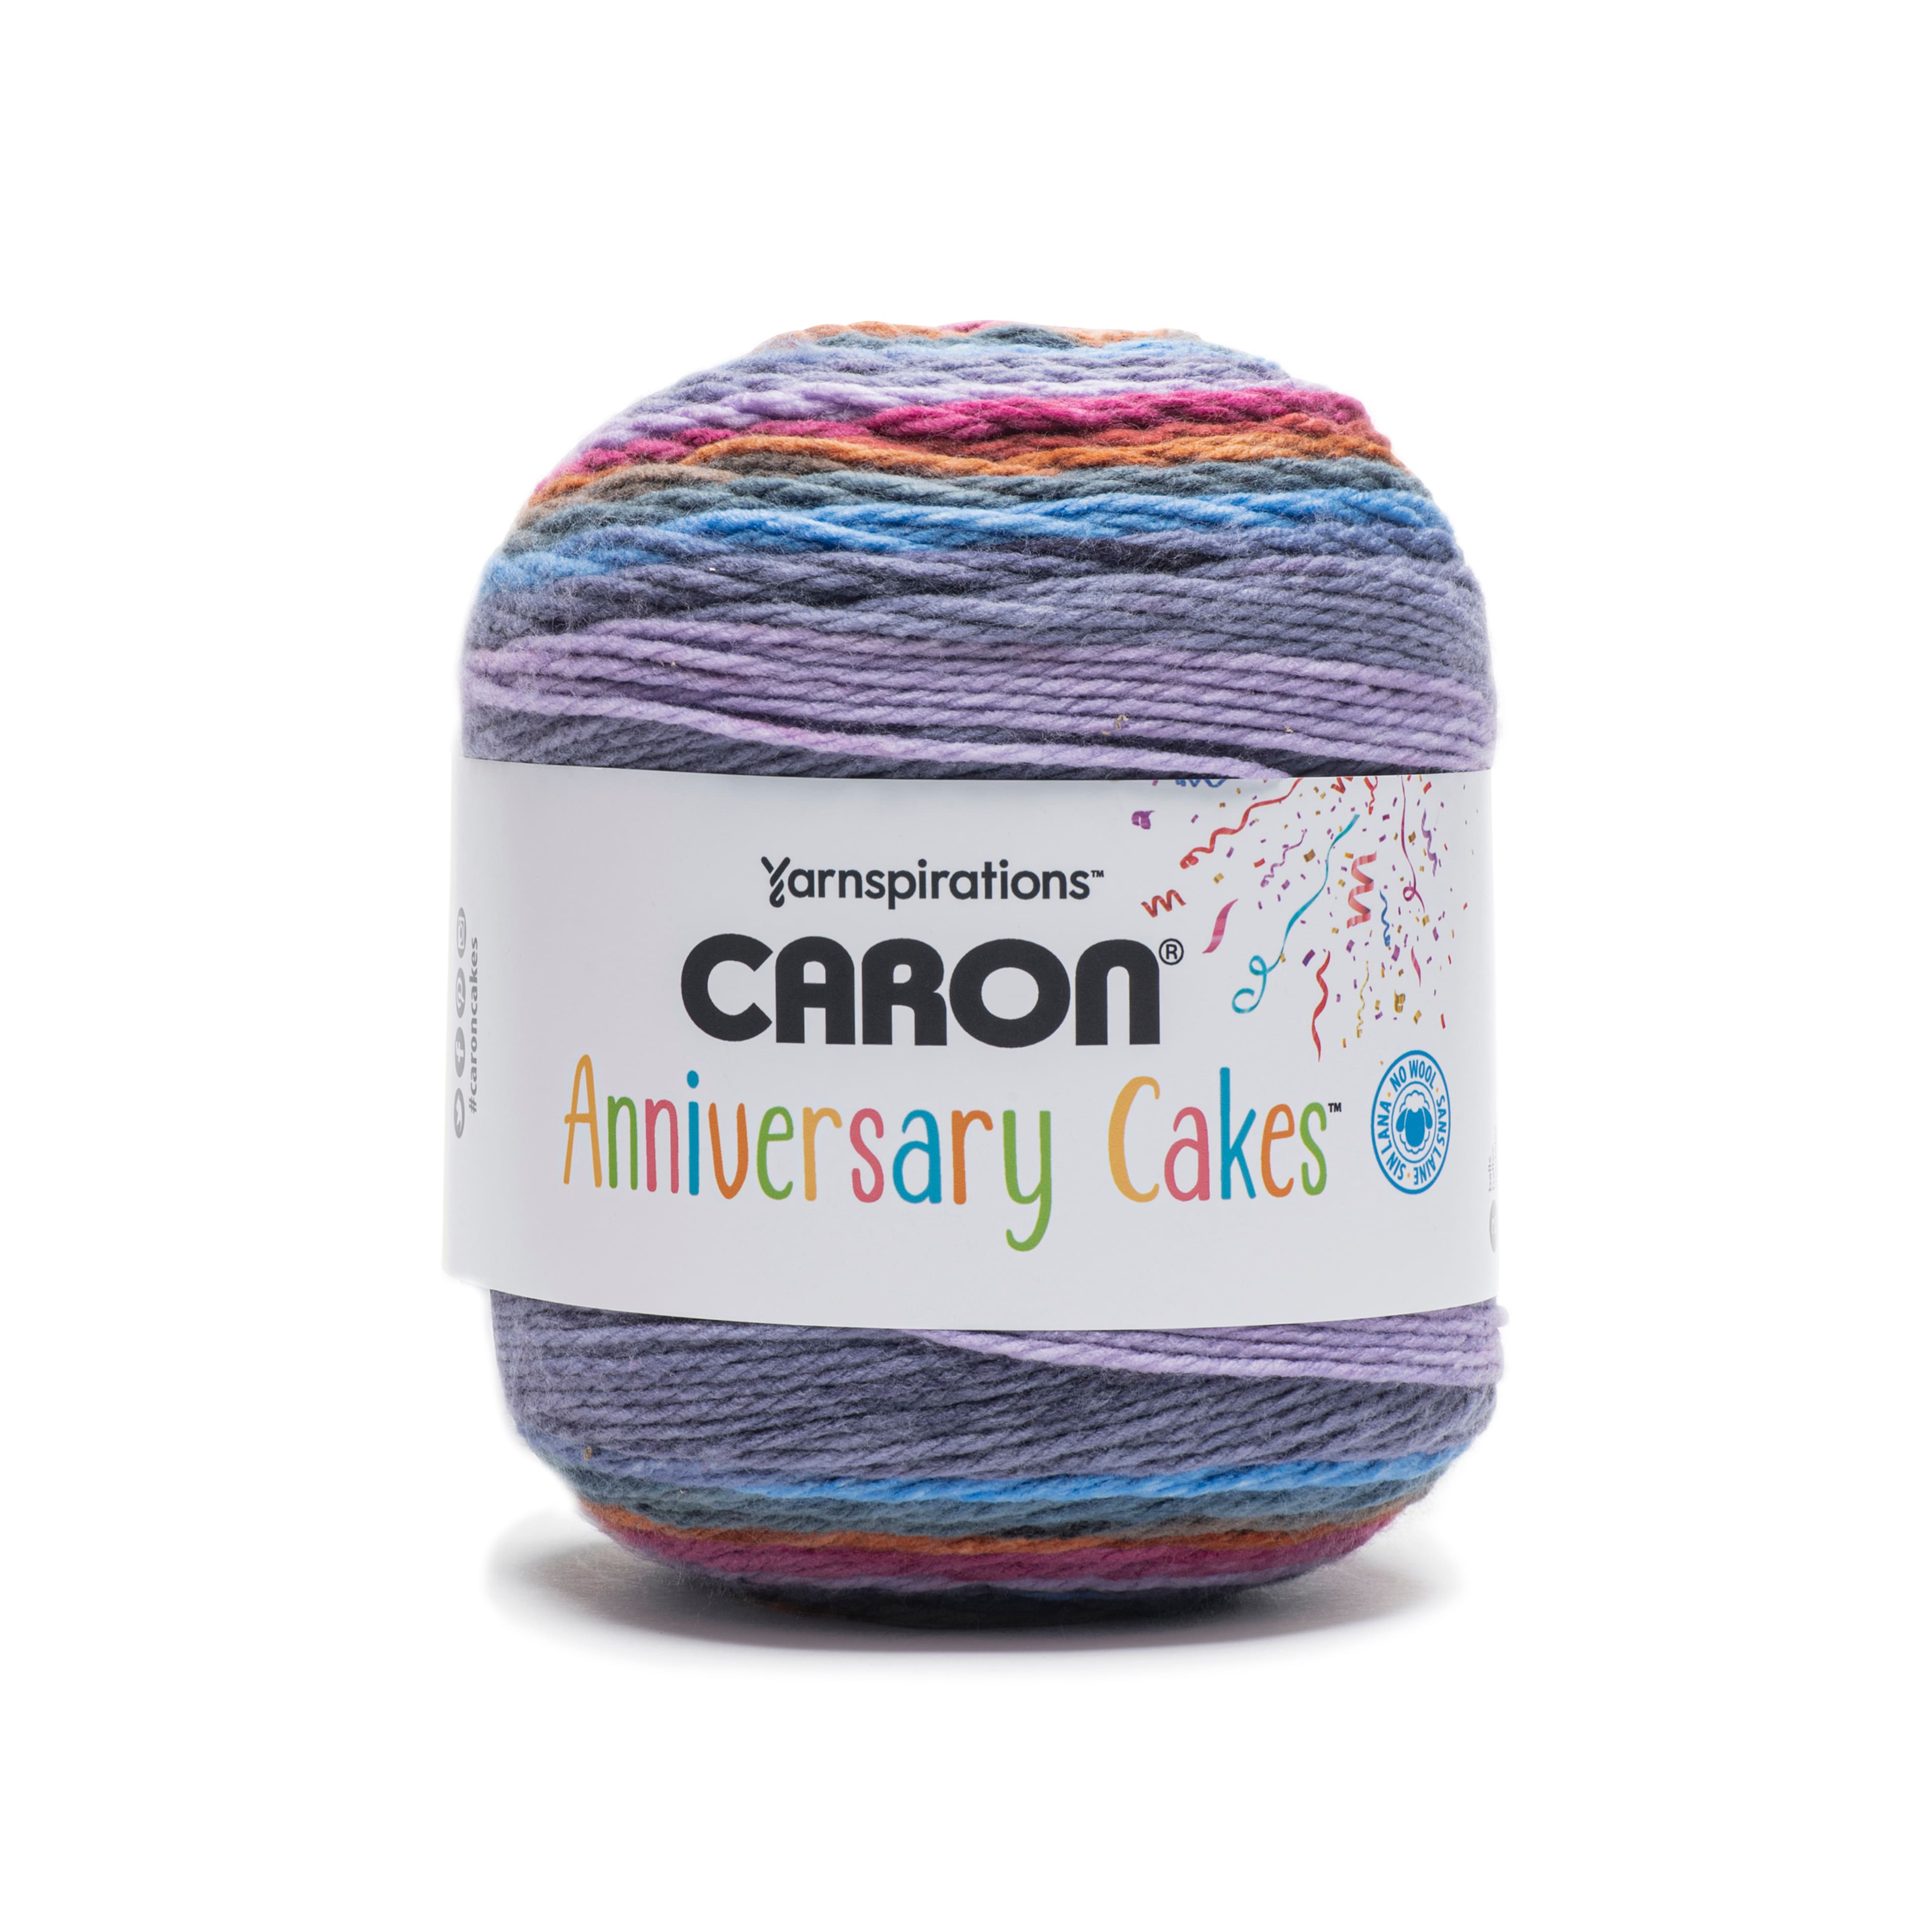 Caron, Office, Yarnspirations Caron Anniversary Cake In Lollipop